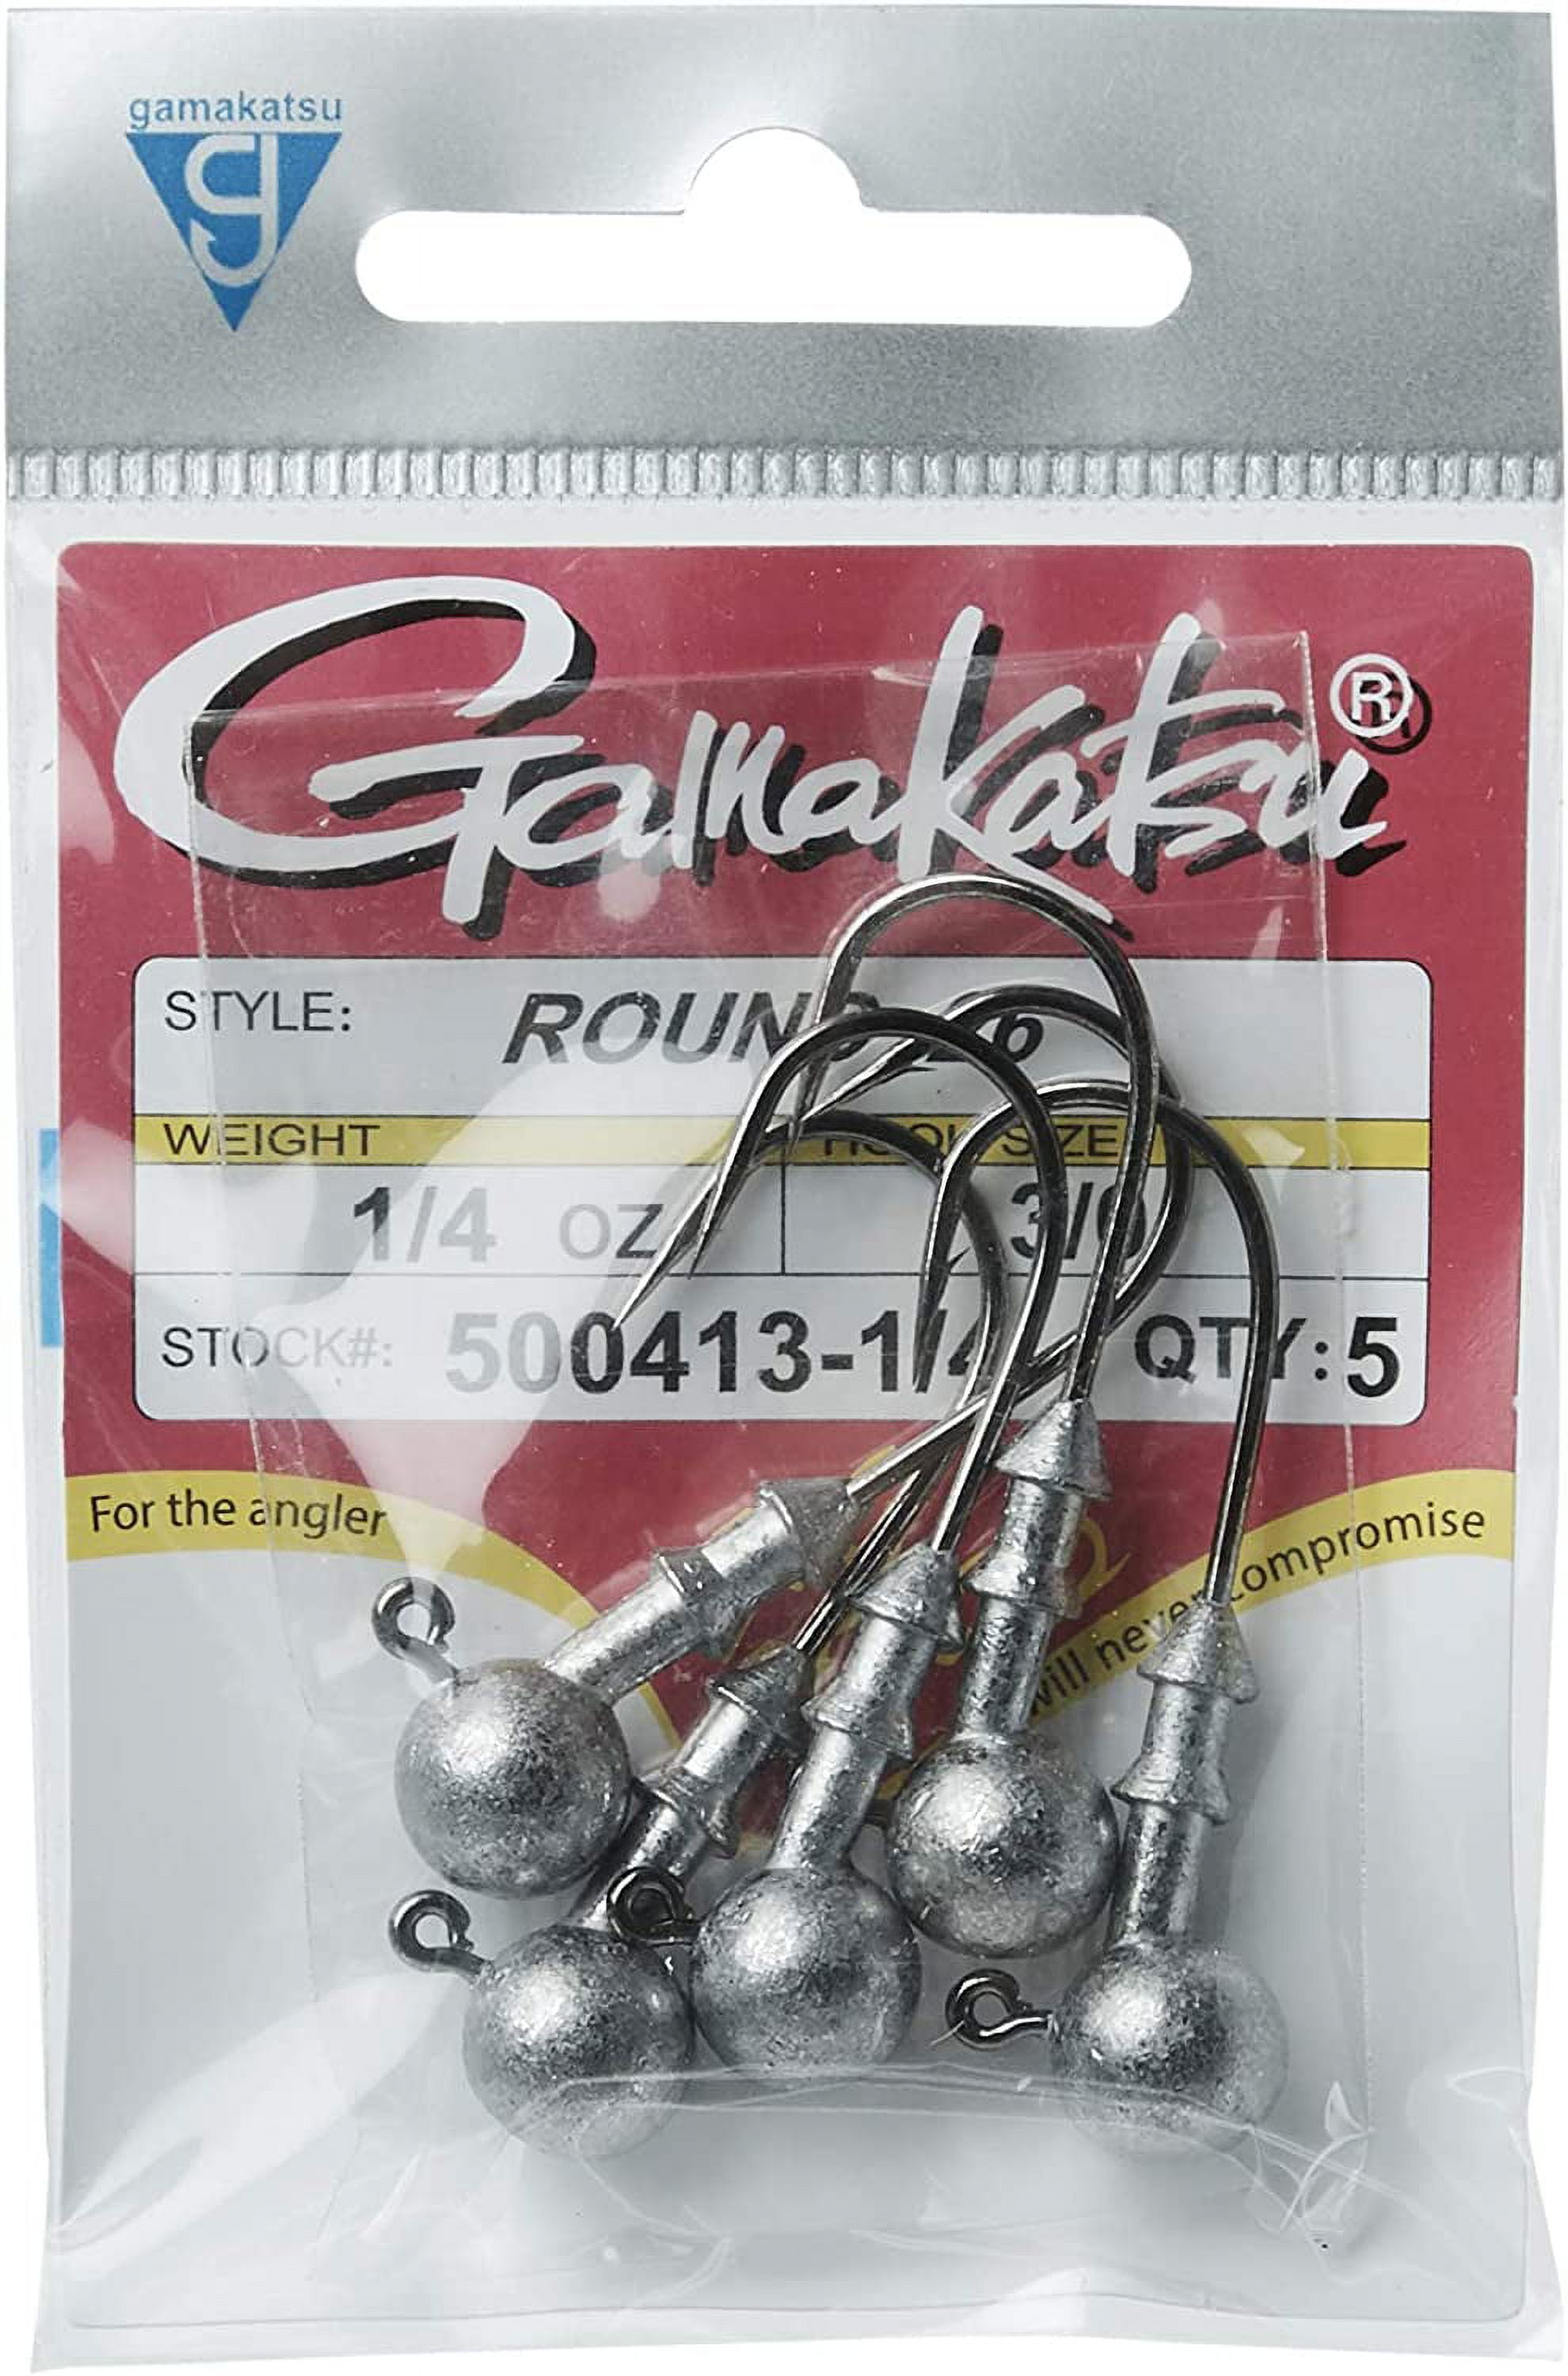 Gamakatsu 500413-1/4 Round 26 Jighead 1/4 oz 3/0 Hook Nickel 